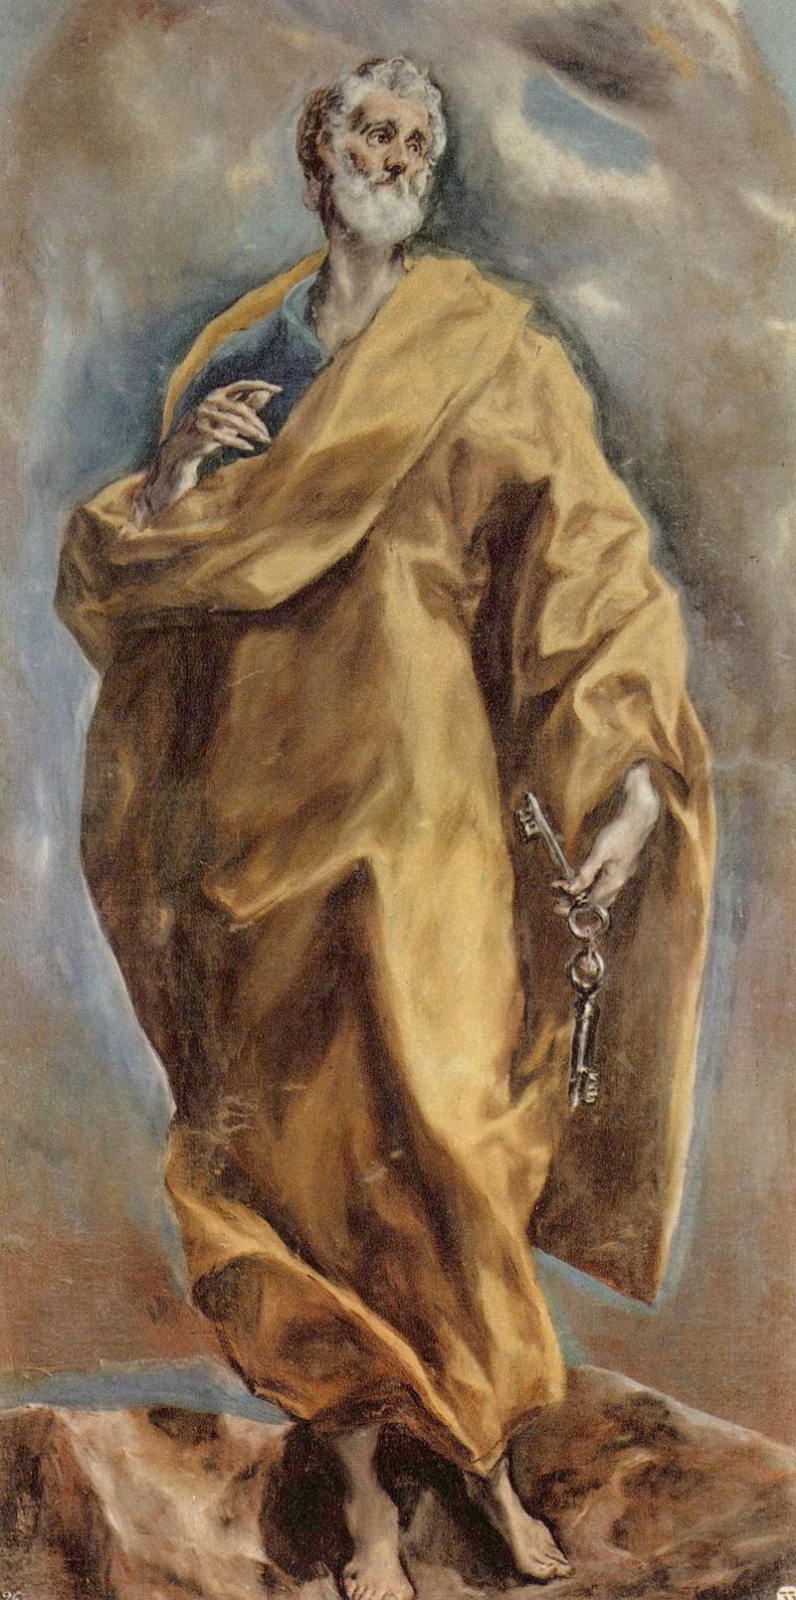 El Greco, Petrus (1605-1610), gemeinfrei - The Yorck Project (2002) 10.000 Meisterwerke der Malerei (DVD-ROM), distributed by DIRECTMEDIA Publishing GmbH. ISBN: 3936122202.